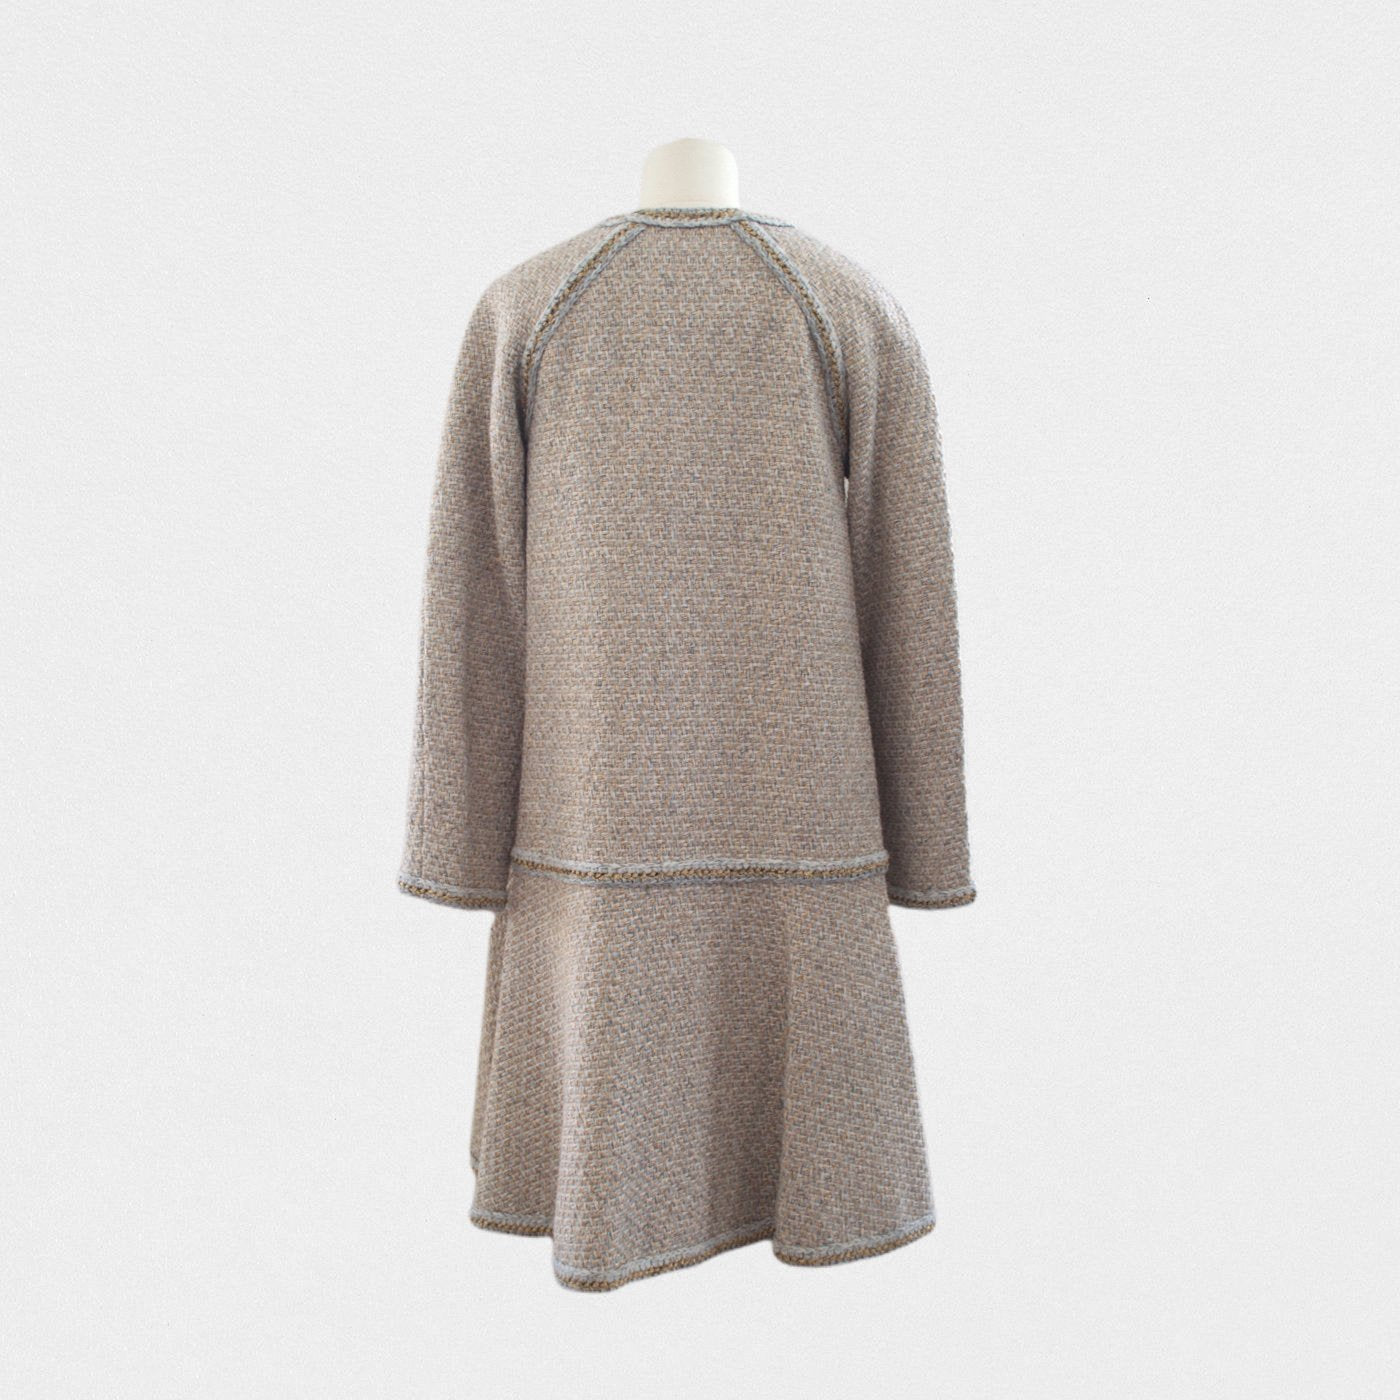 Lysis vintage Chanel tweed long coat - M - Métiers d'art Paris New York 2018-2019